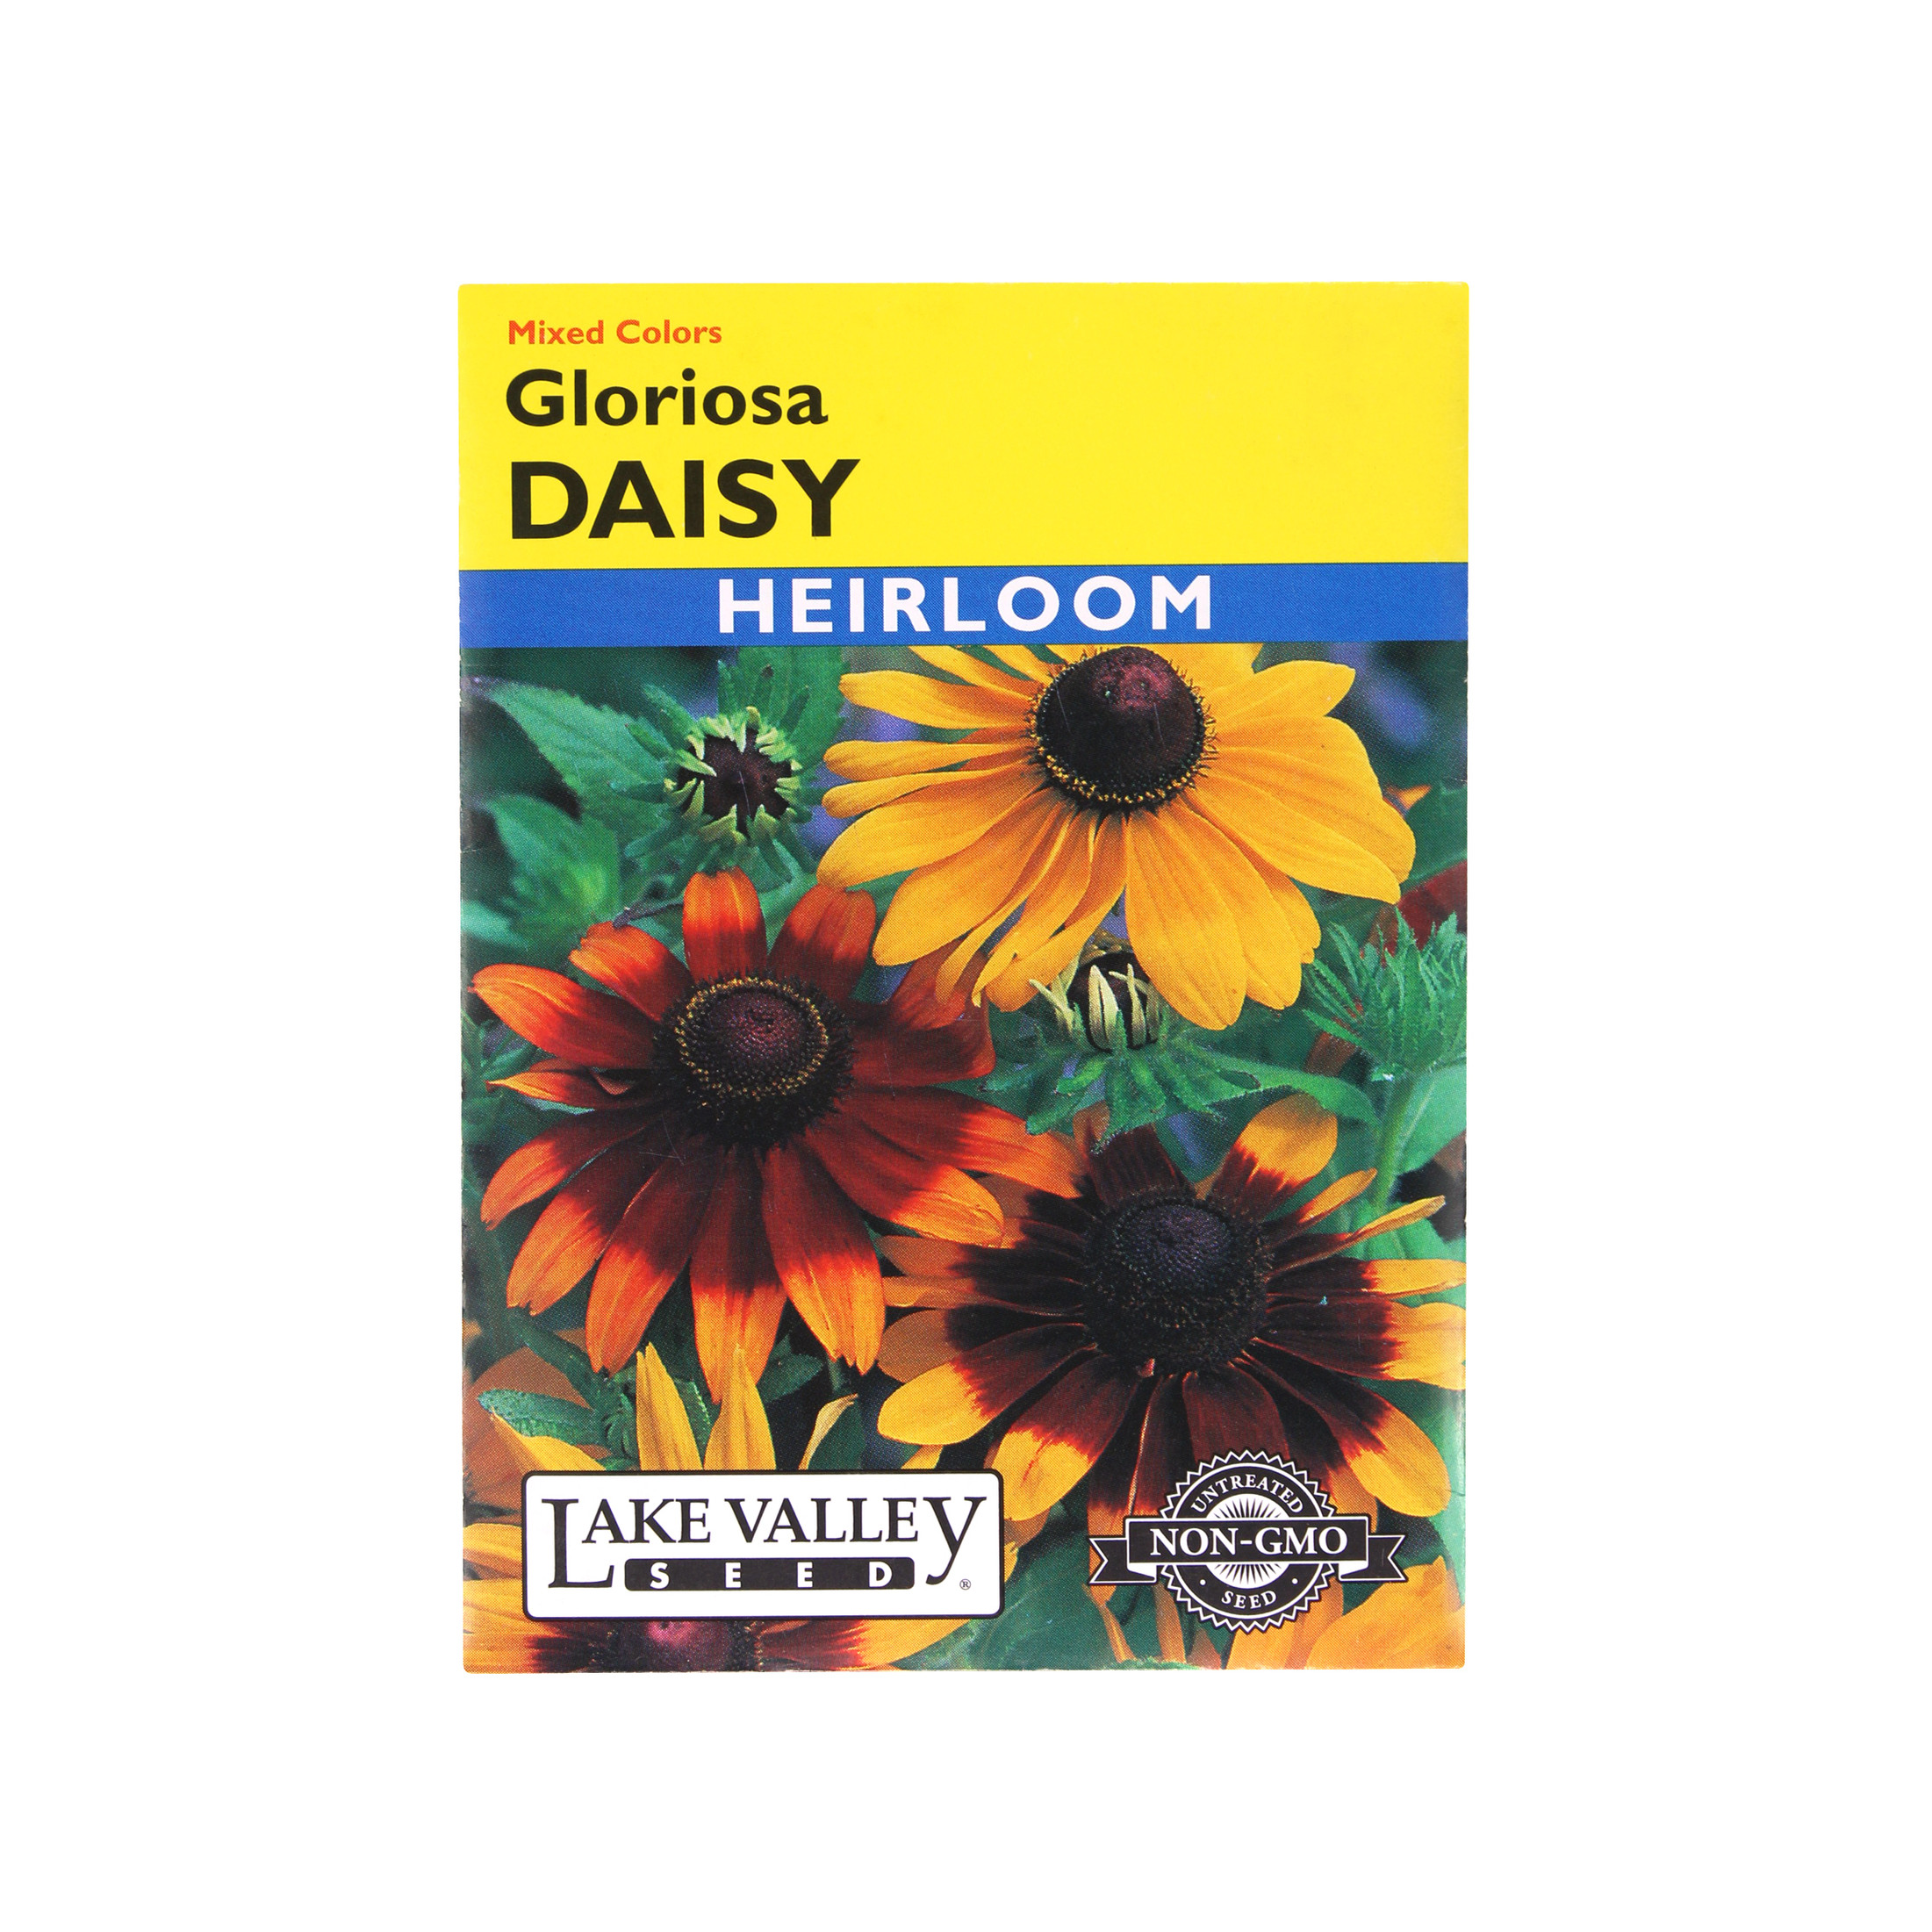 Lake Valley Seed Daisy, Gloriosa Mixed Colors Heirloom, 0.4g